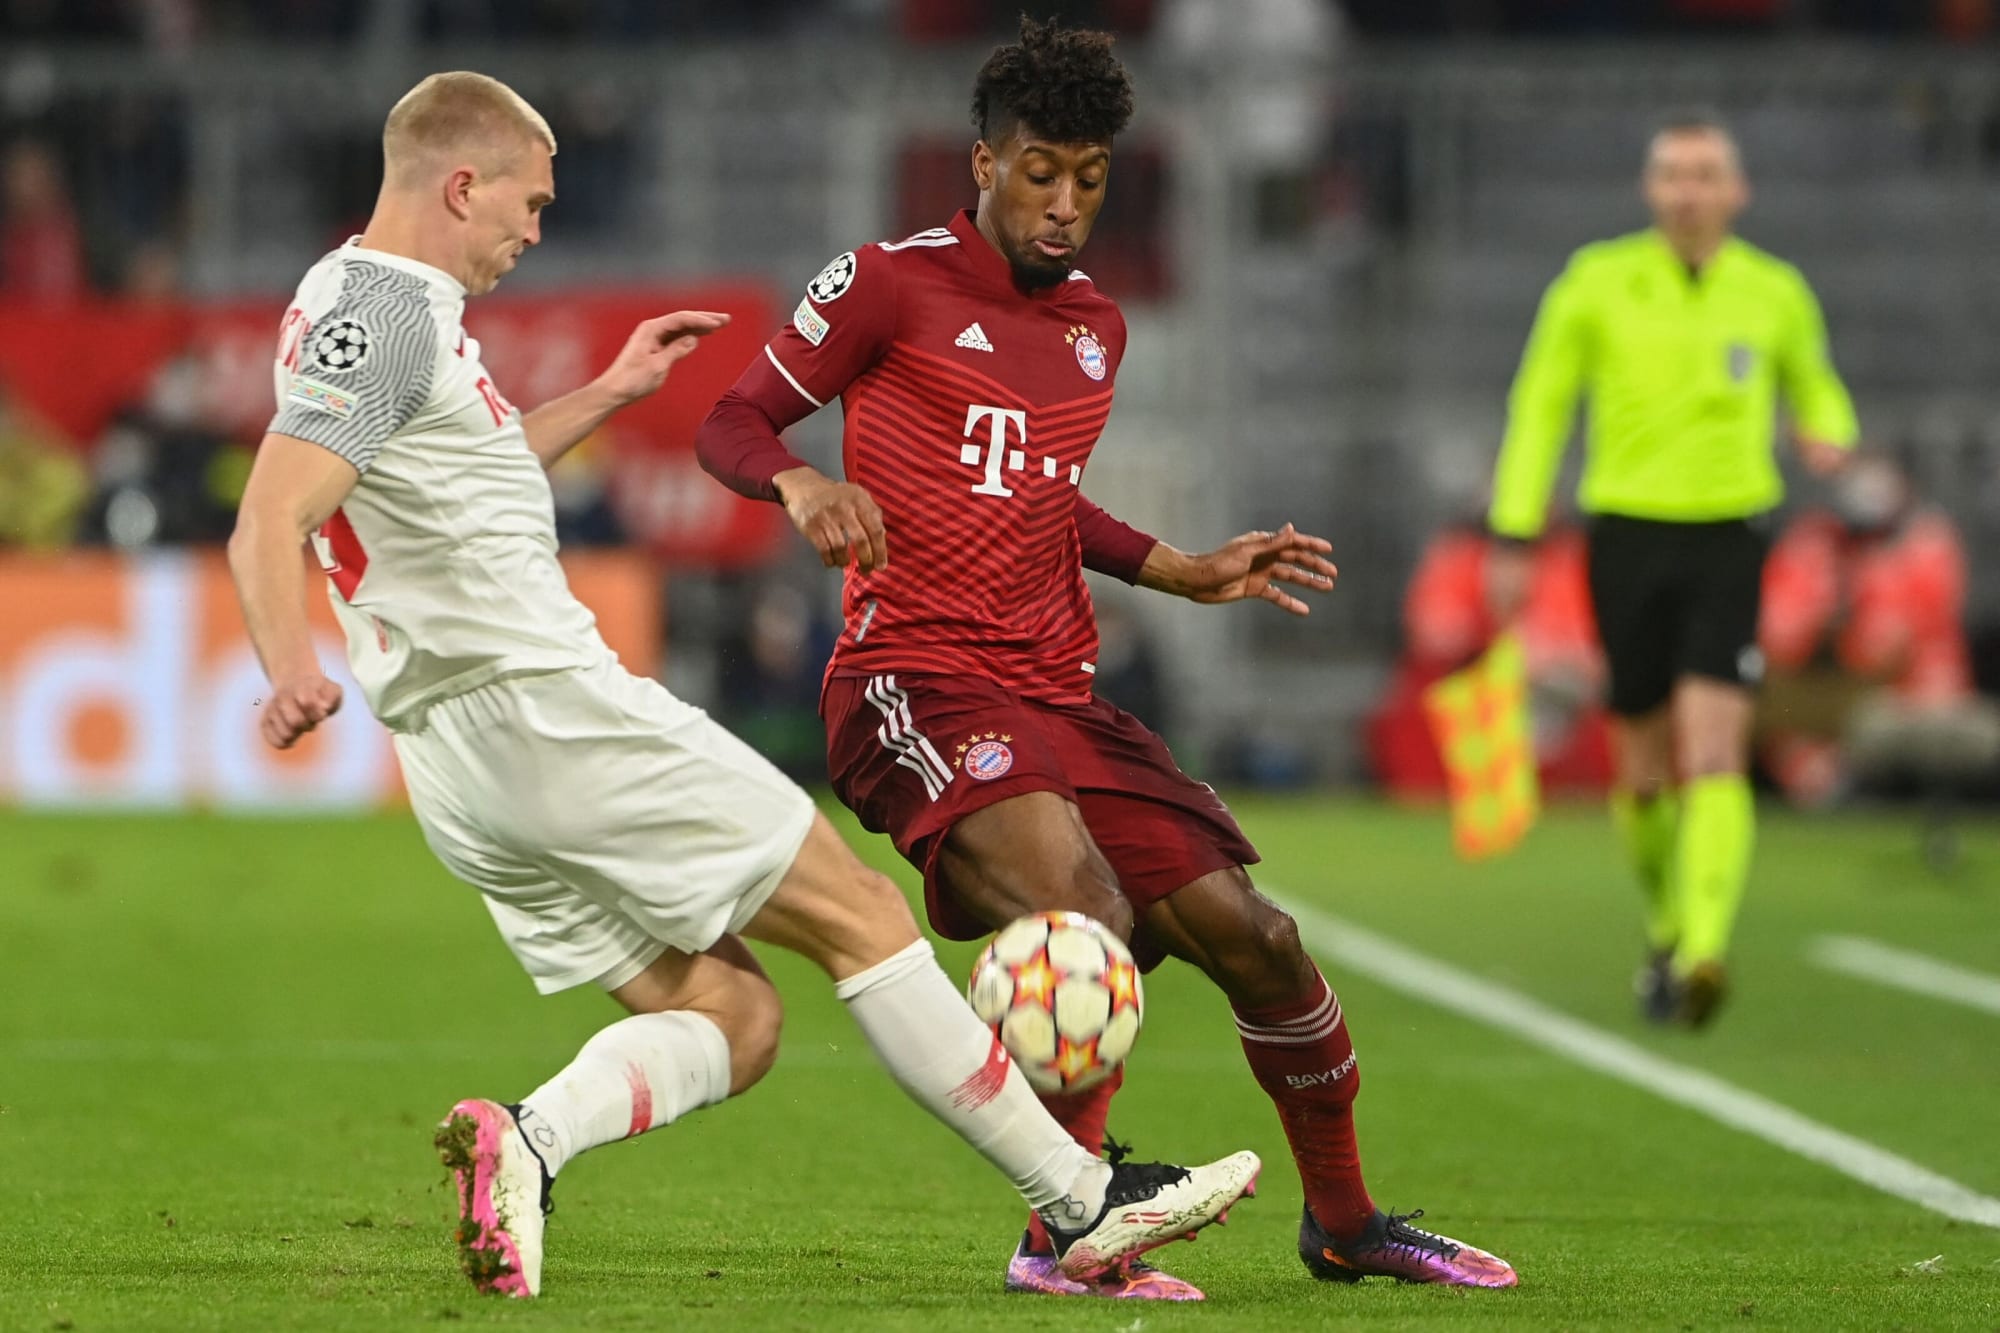 Bayern Munich: Nagelsmann heaps praise on hard-working Coman